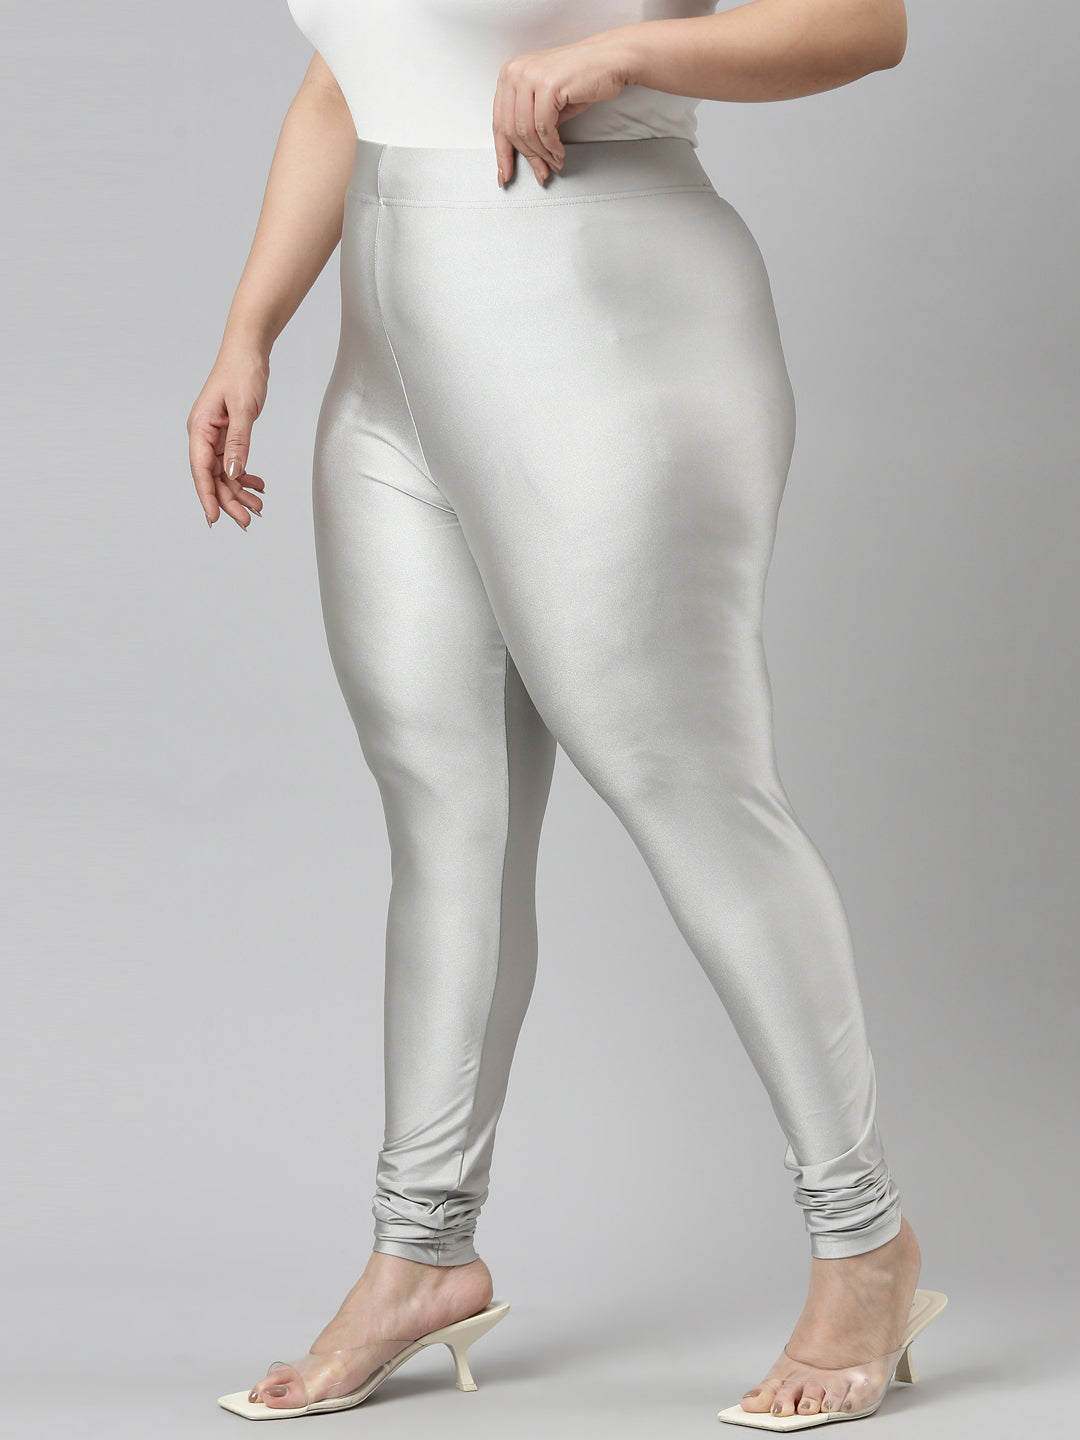 Churidar Plain Ladies Silver Shimmer Leggings, Size: XL-XXL at Rs